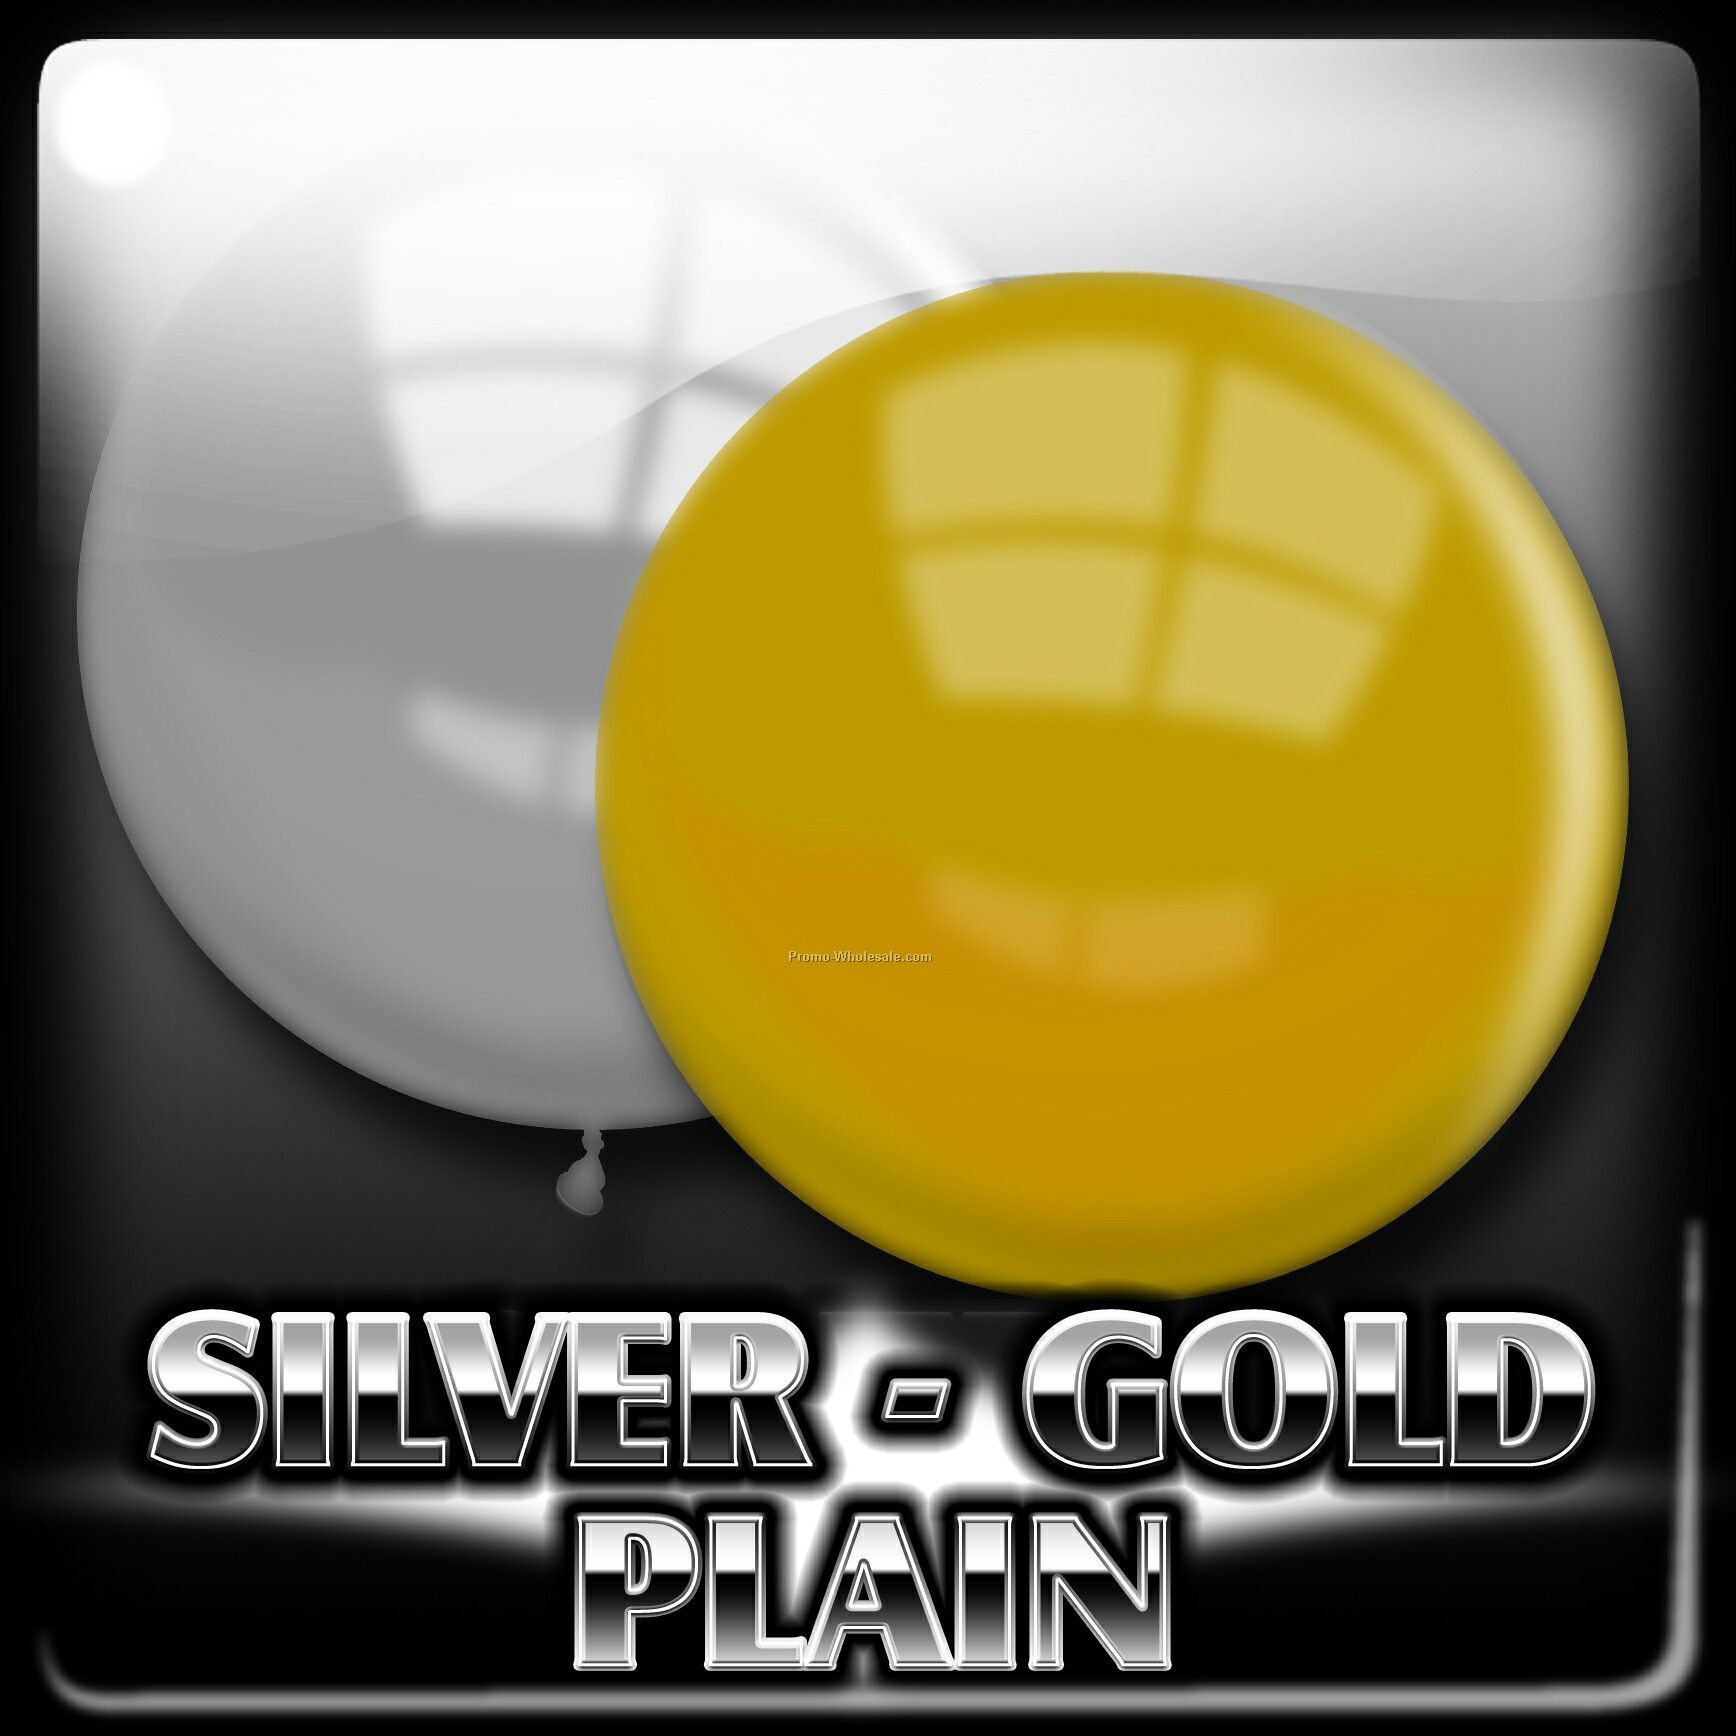 36" Unimprinted Jumbo Silver-gold Balloon